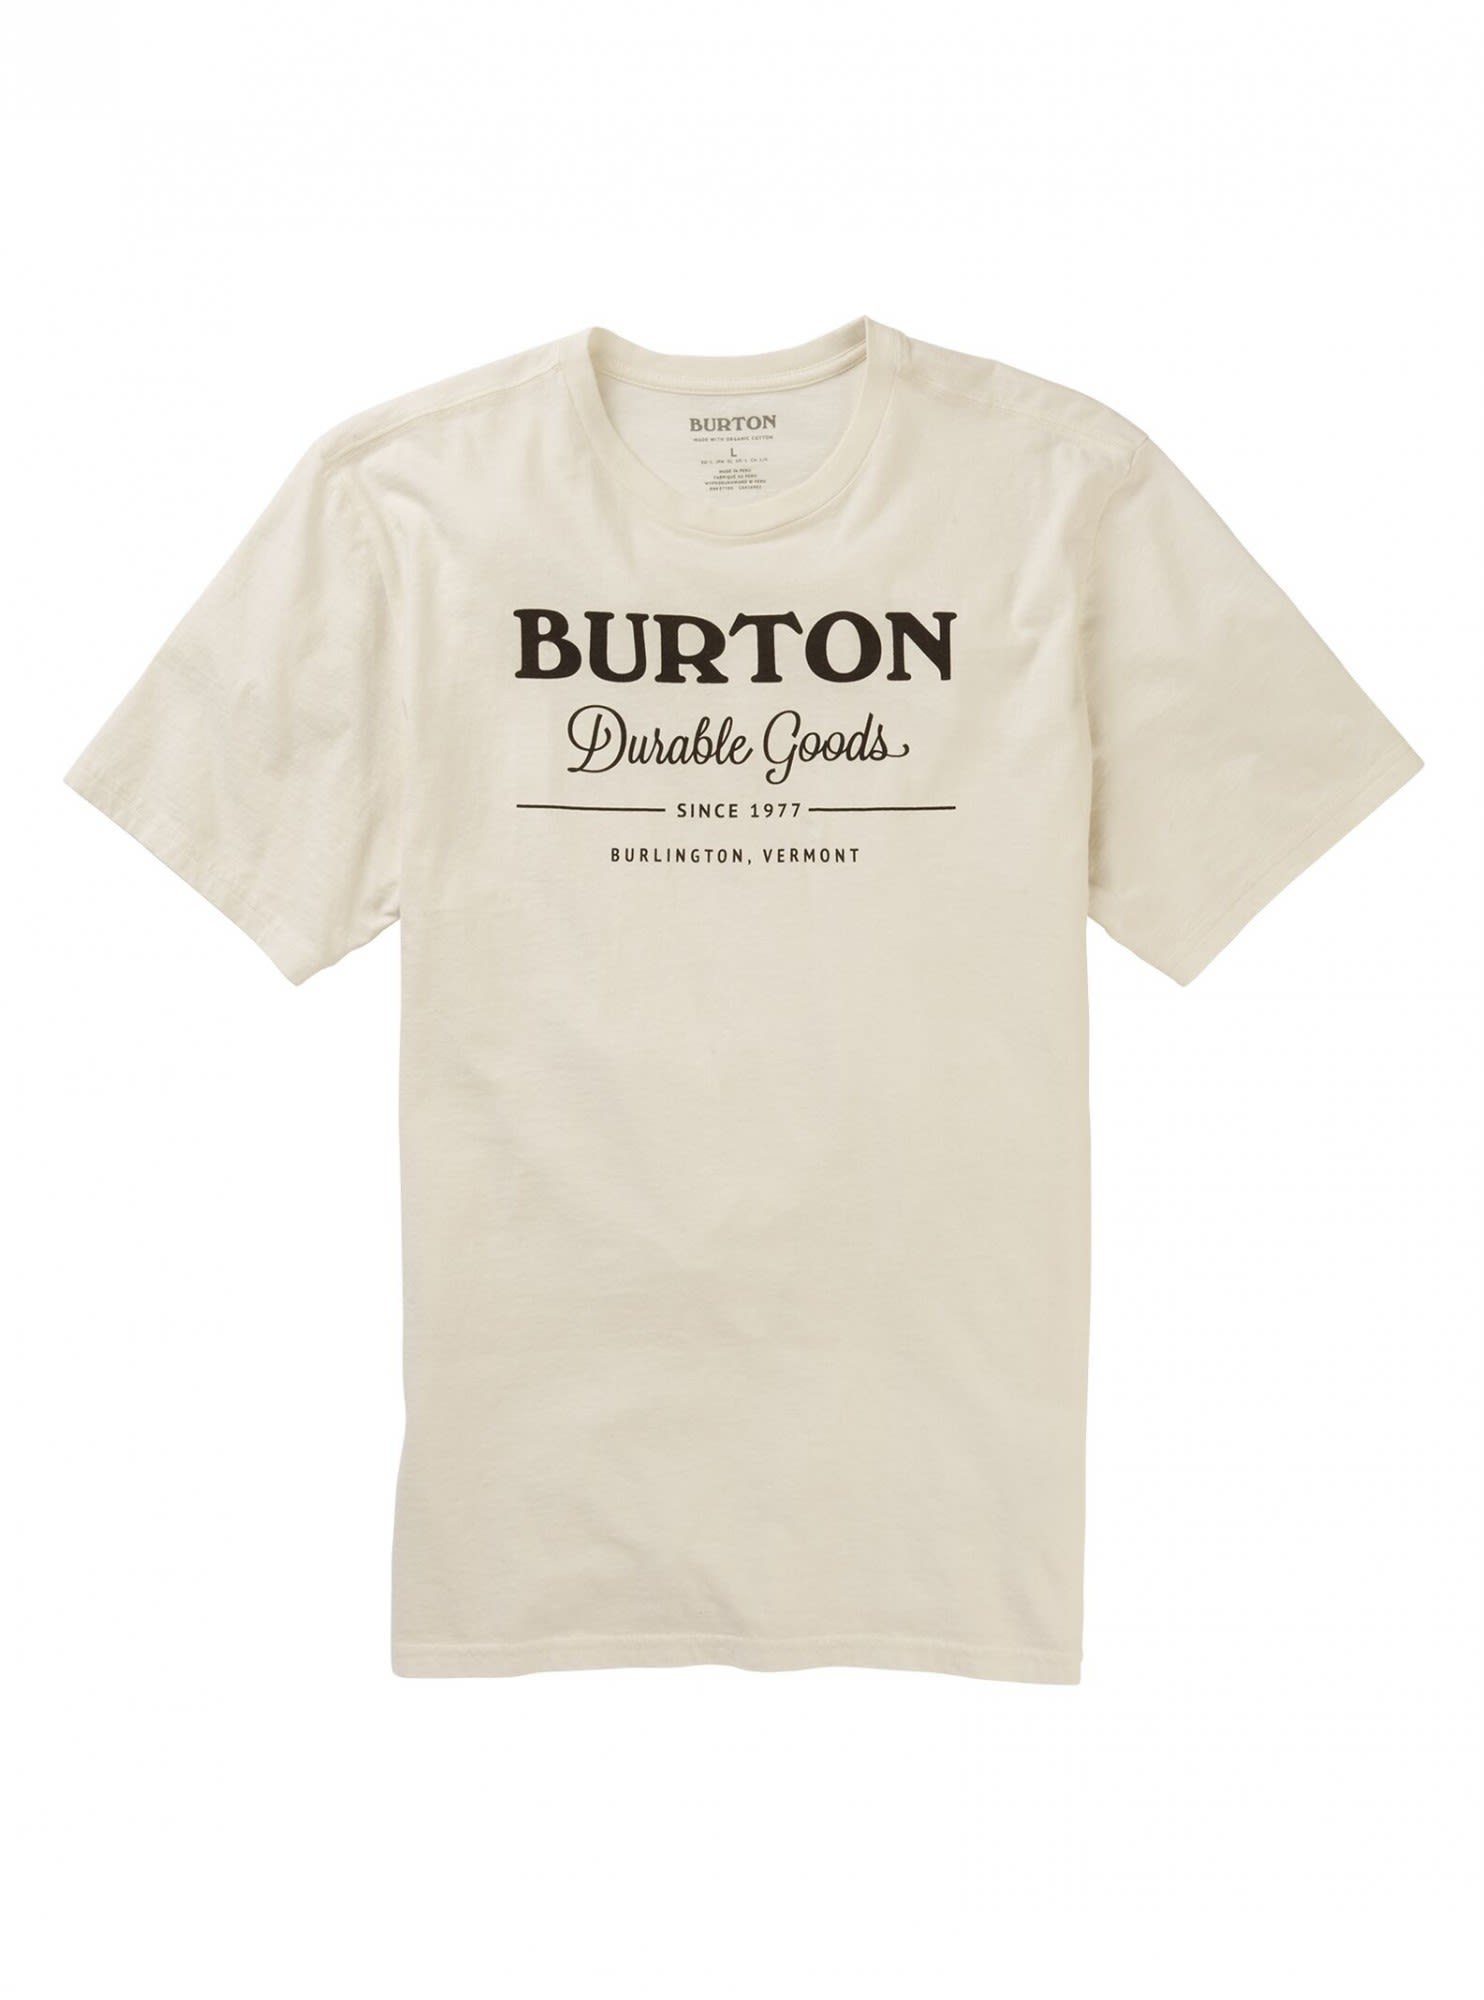 Burton T-Shirt Burton Goods Durable Mb Stout M White Shortsleeve T-shirt